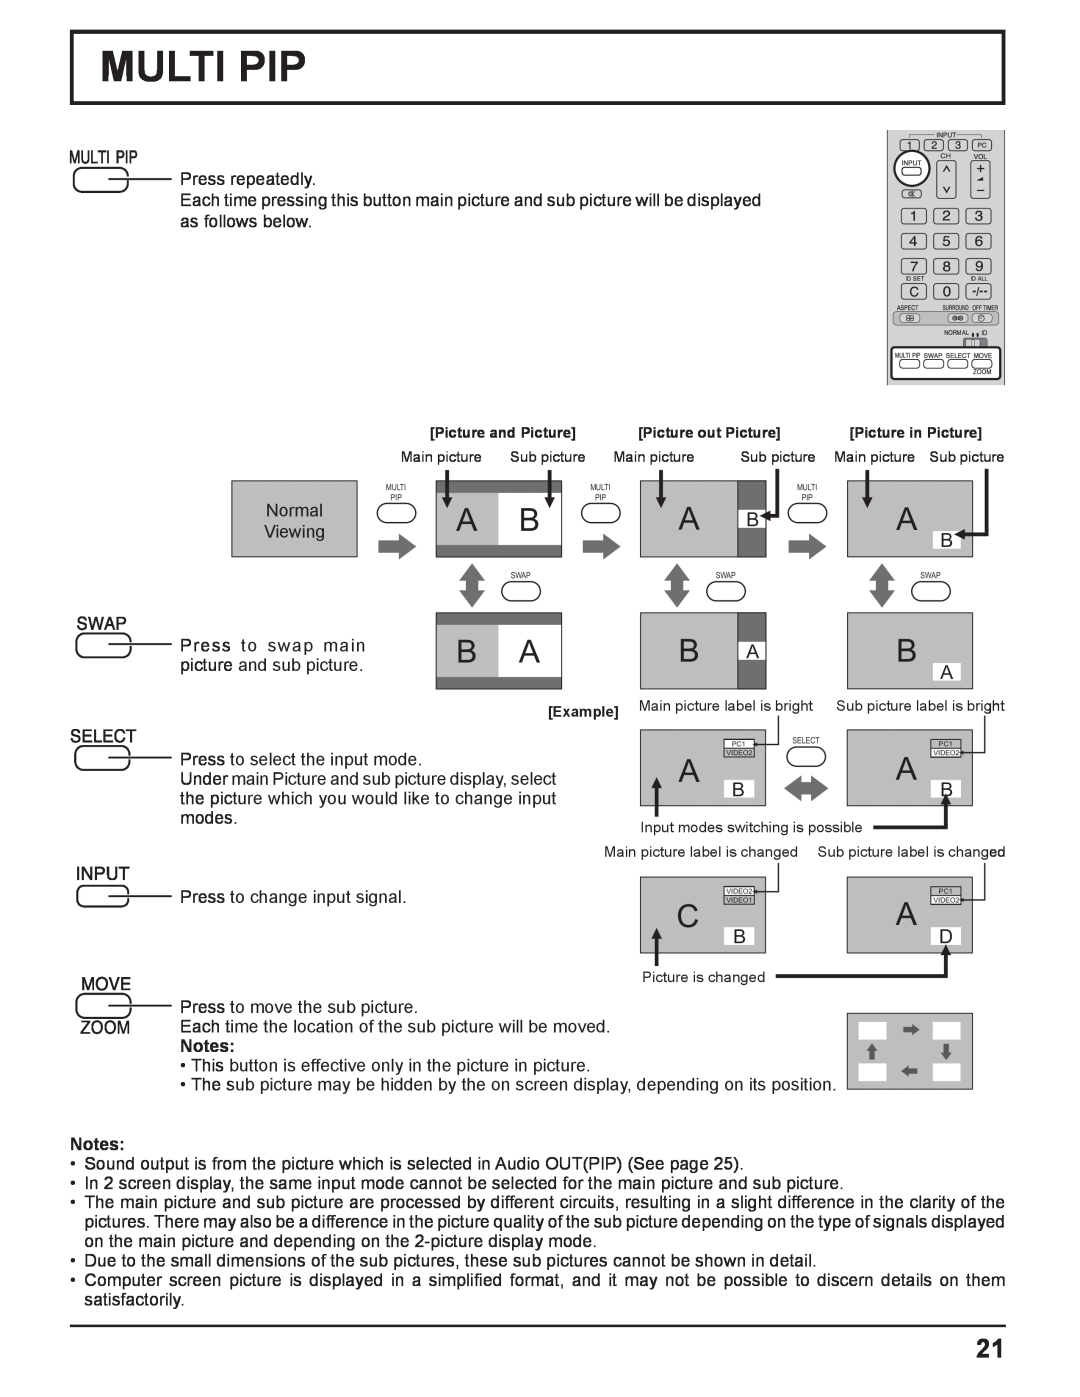 Panasonic TQBC2033 manual Multi Pip, Picture and Picture, Picture out Picture, Picture in Picture, Example 